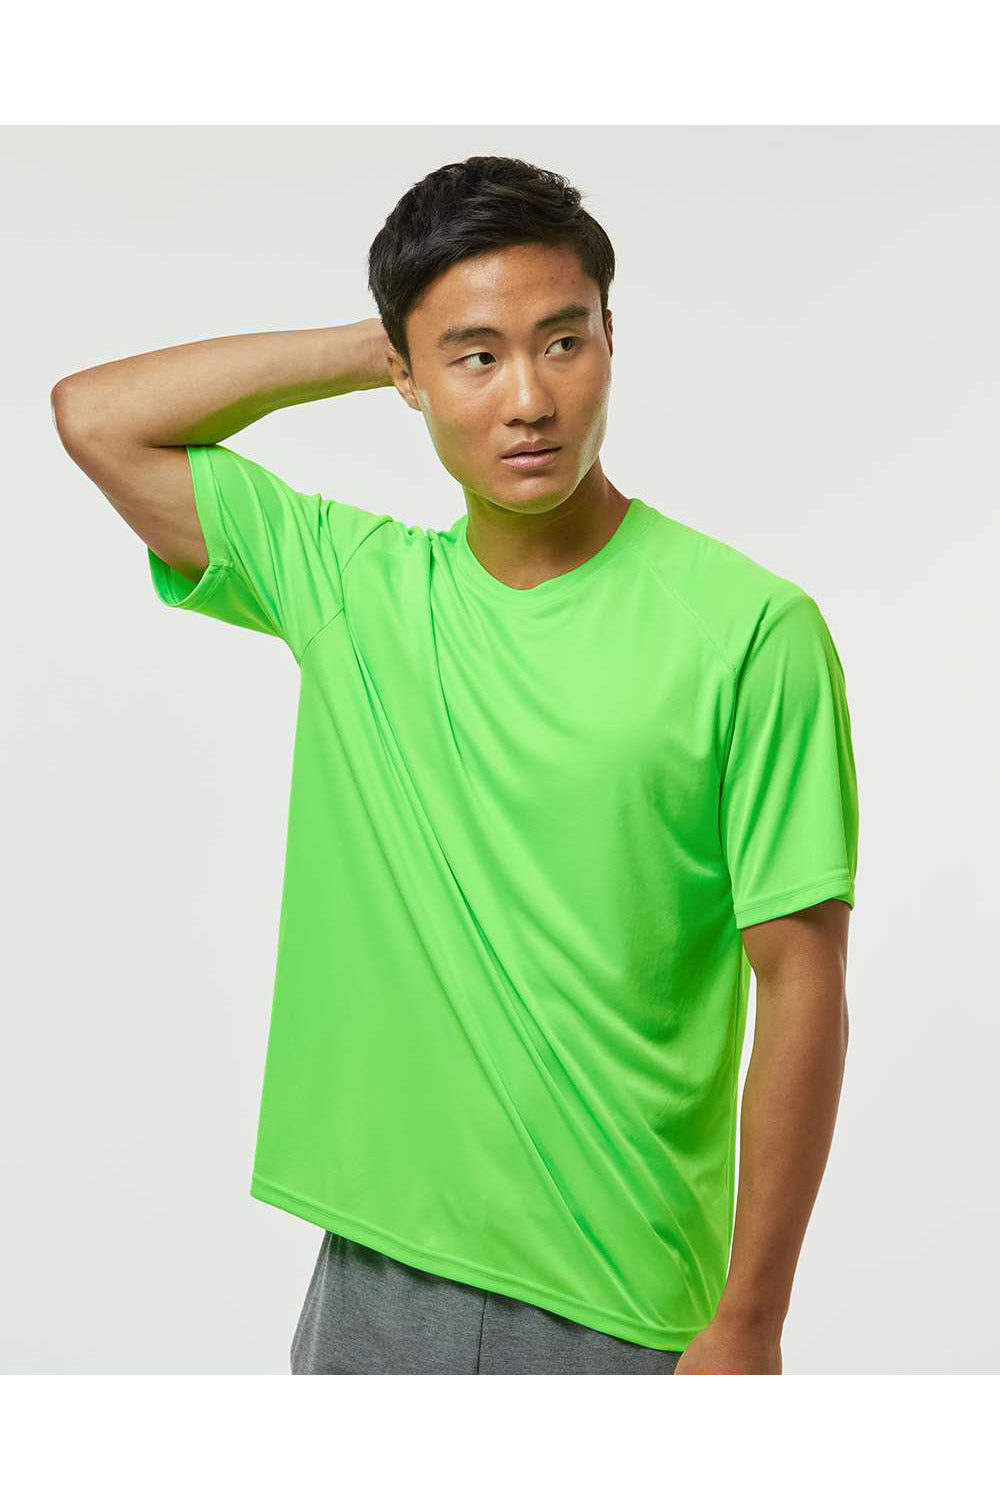 Paragon 200 Mens Islander Performance Short Sleeve Crewneck T-Shirt Neon Lime Green Model Side